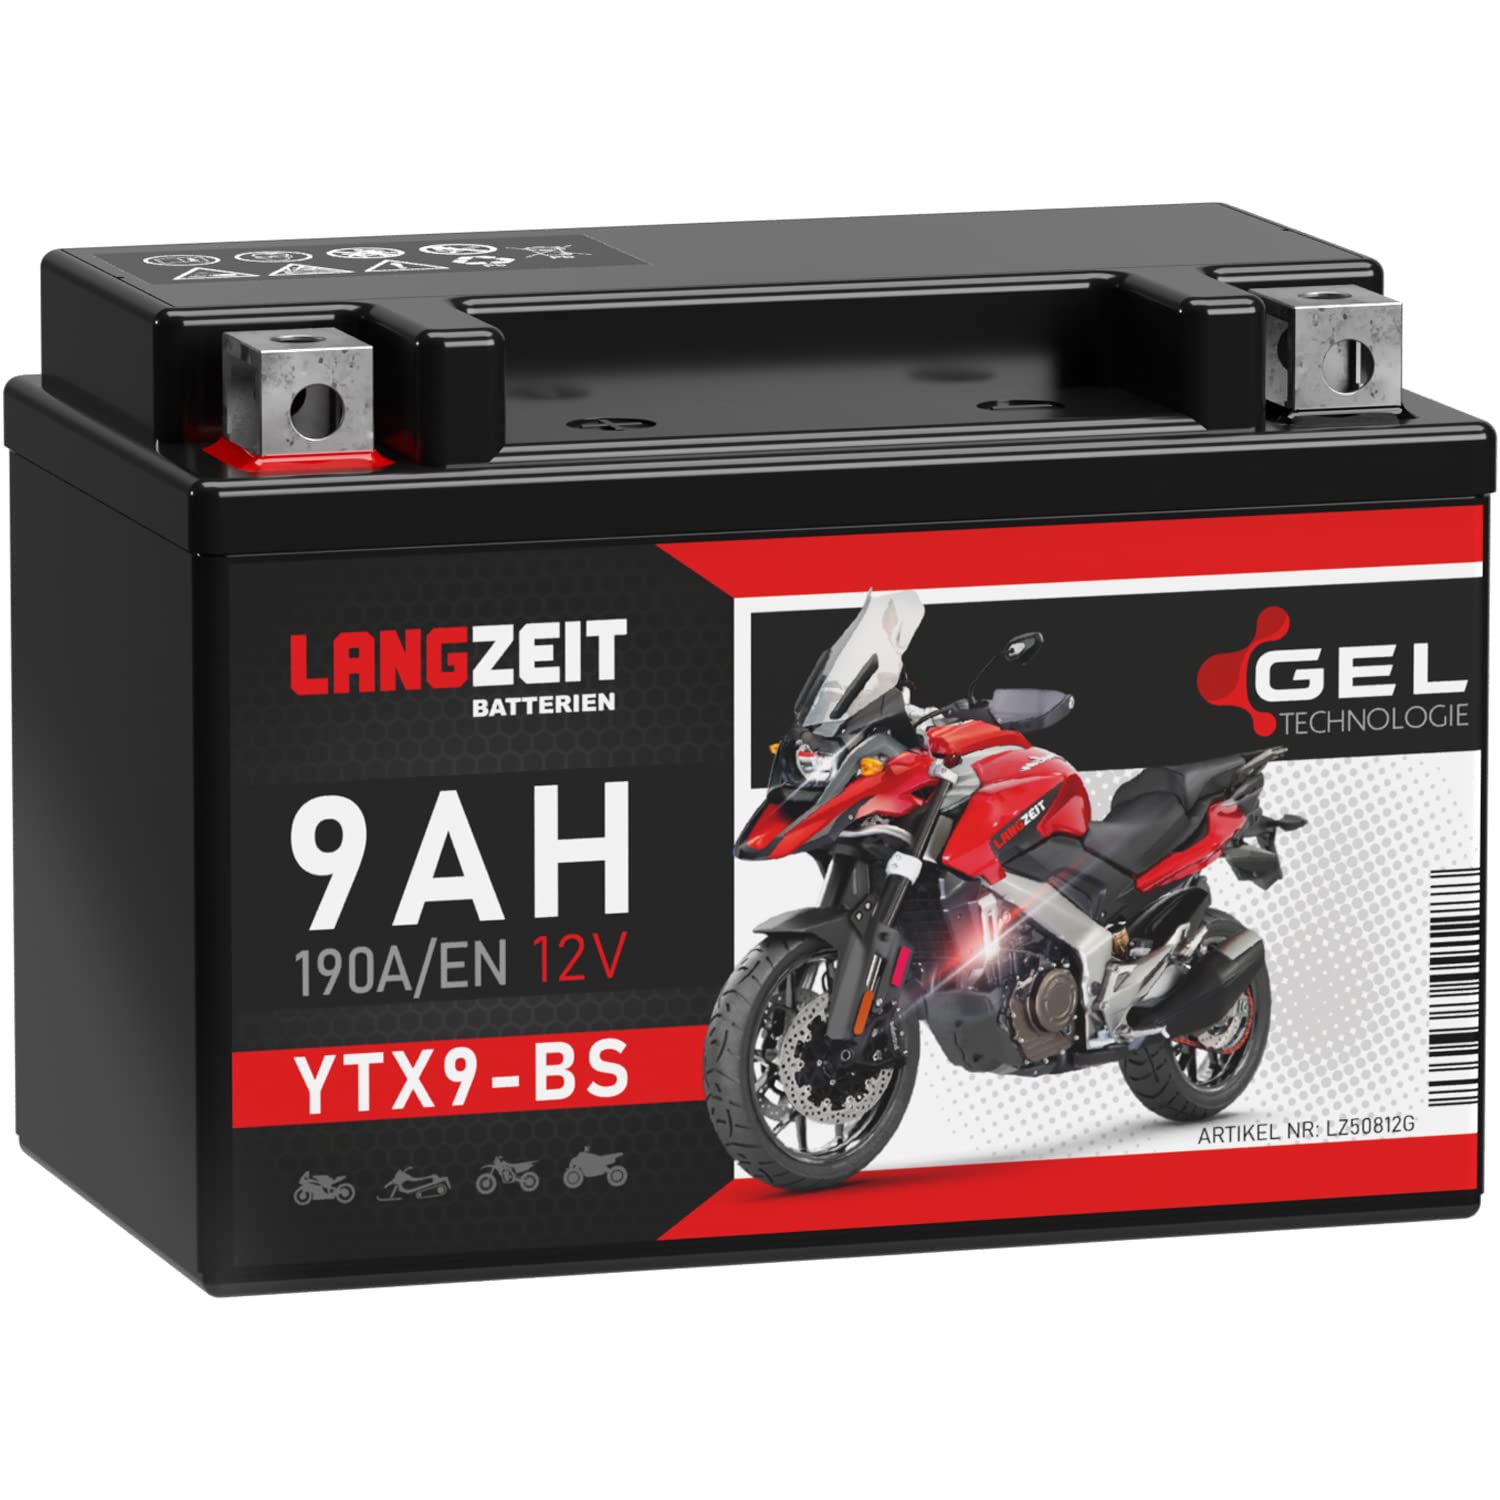 LANGZEIT YTX9-BS Motorradbatterie 12V 9Ah 190A/EN Gel Batterie 12V doppelte Lebensdauer entspricht 50812 CTX9-BS ETX9-BS GTX9-BS vorgeladen auslaufsicher wartungsfrei ersetzt 8Ah von LANGZEIT Batterien